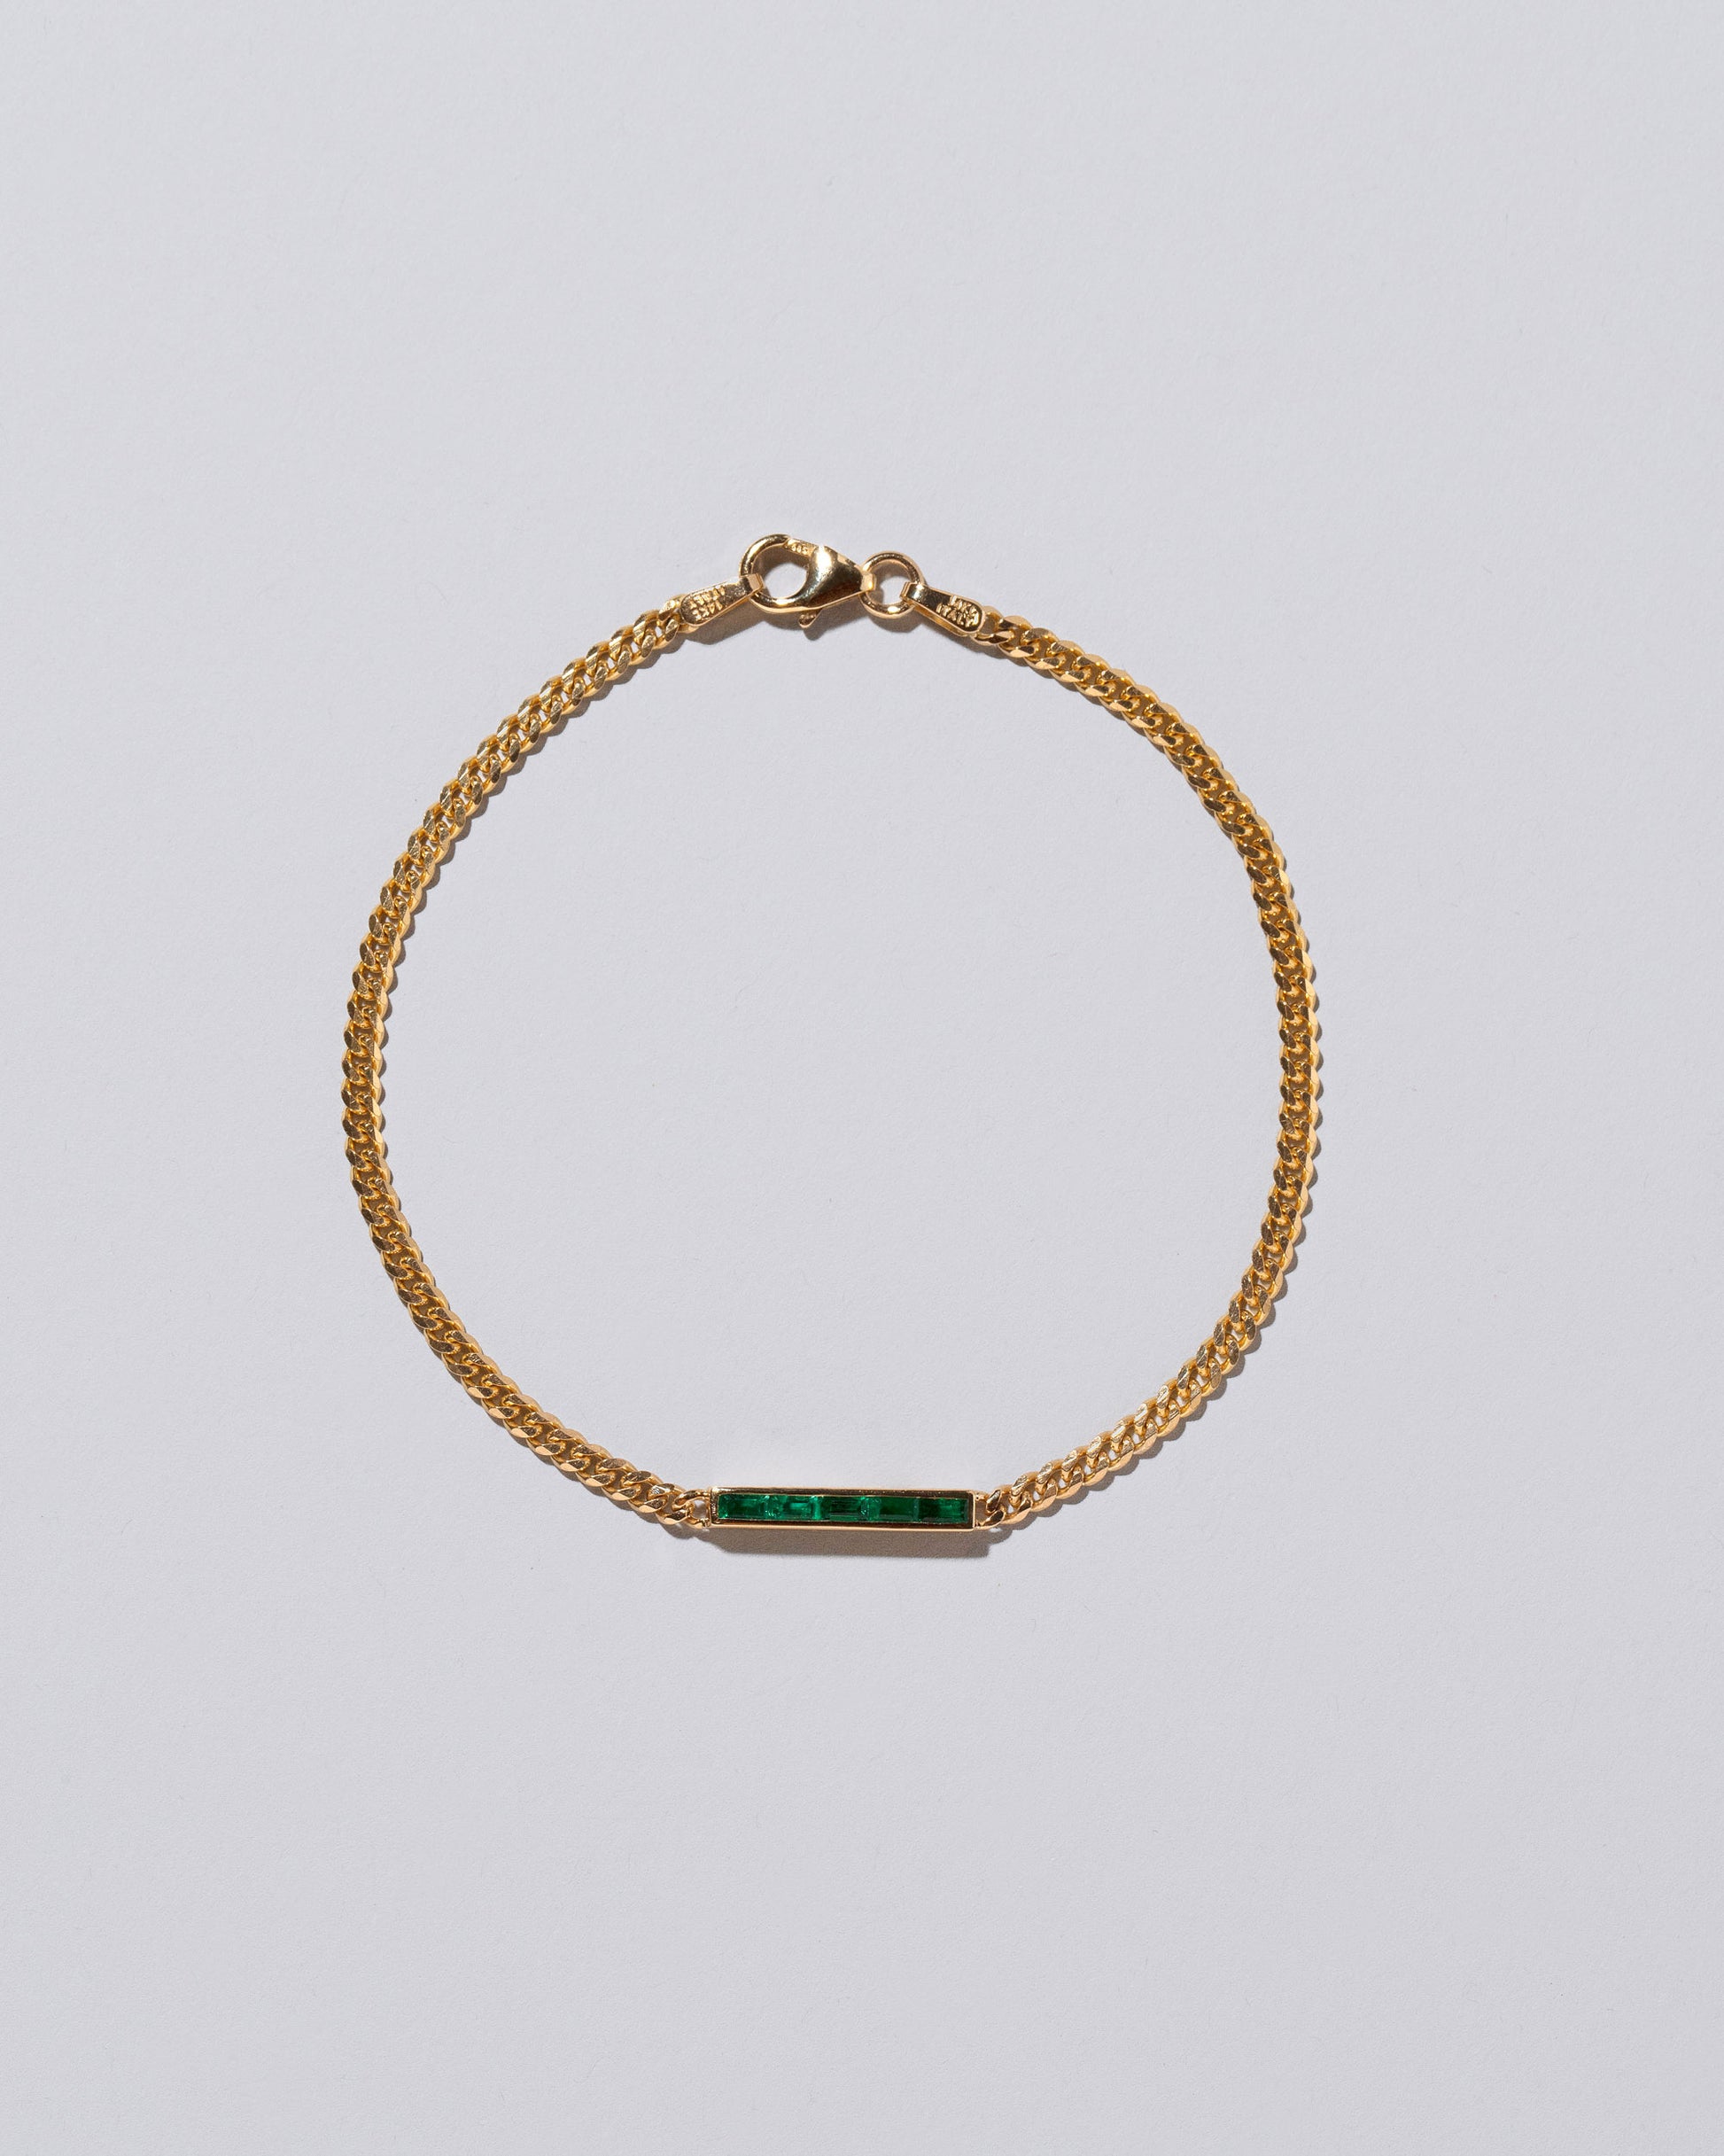 Emerald 2.4mm Identity Chain Bracelet on light color background.